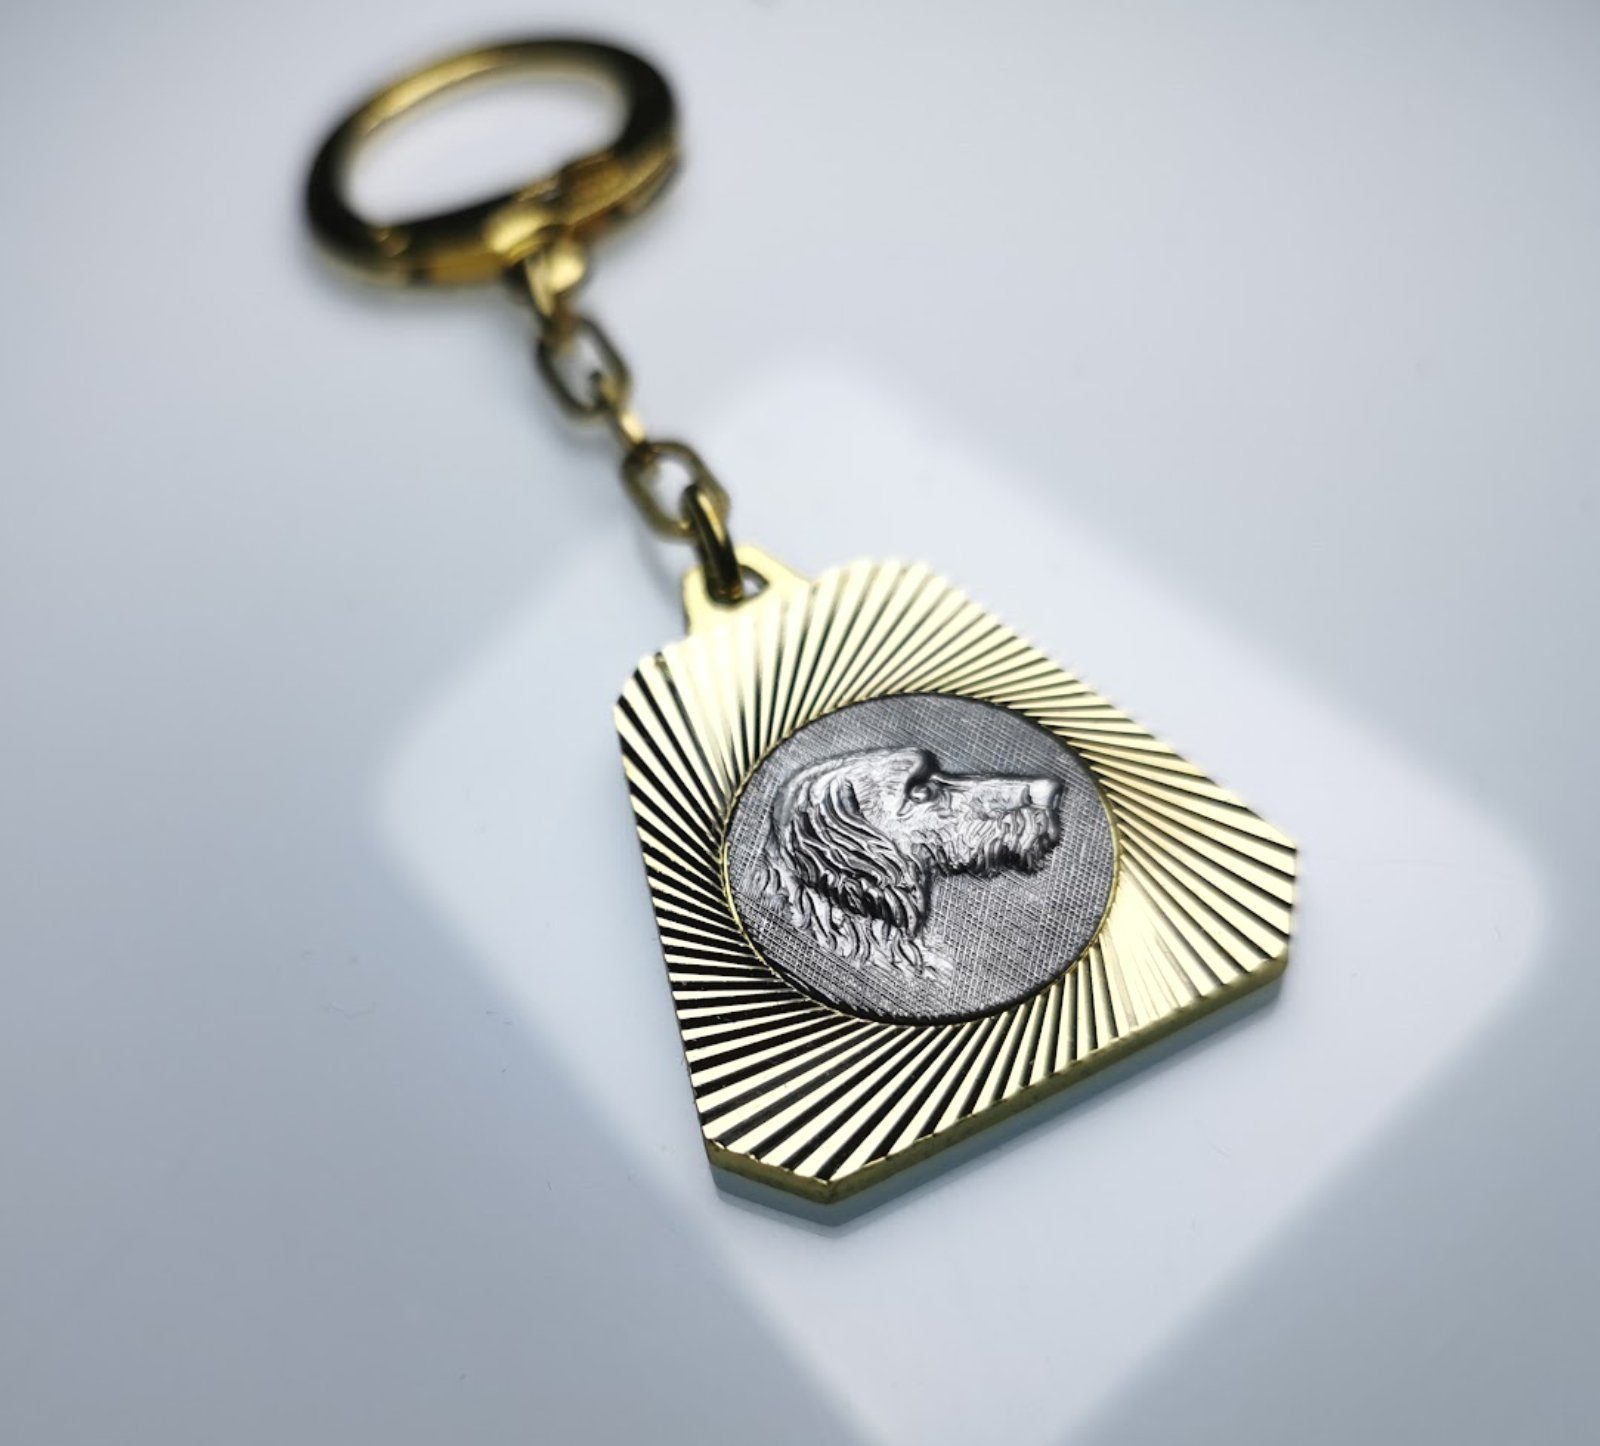 HR Autocomfort Schlüsselanhänger Metall Hund Hundekopf Relief 1960 Dackelkopf Dackel 3D aus Emblem